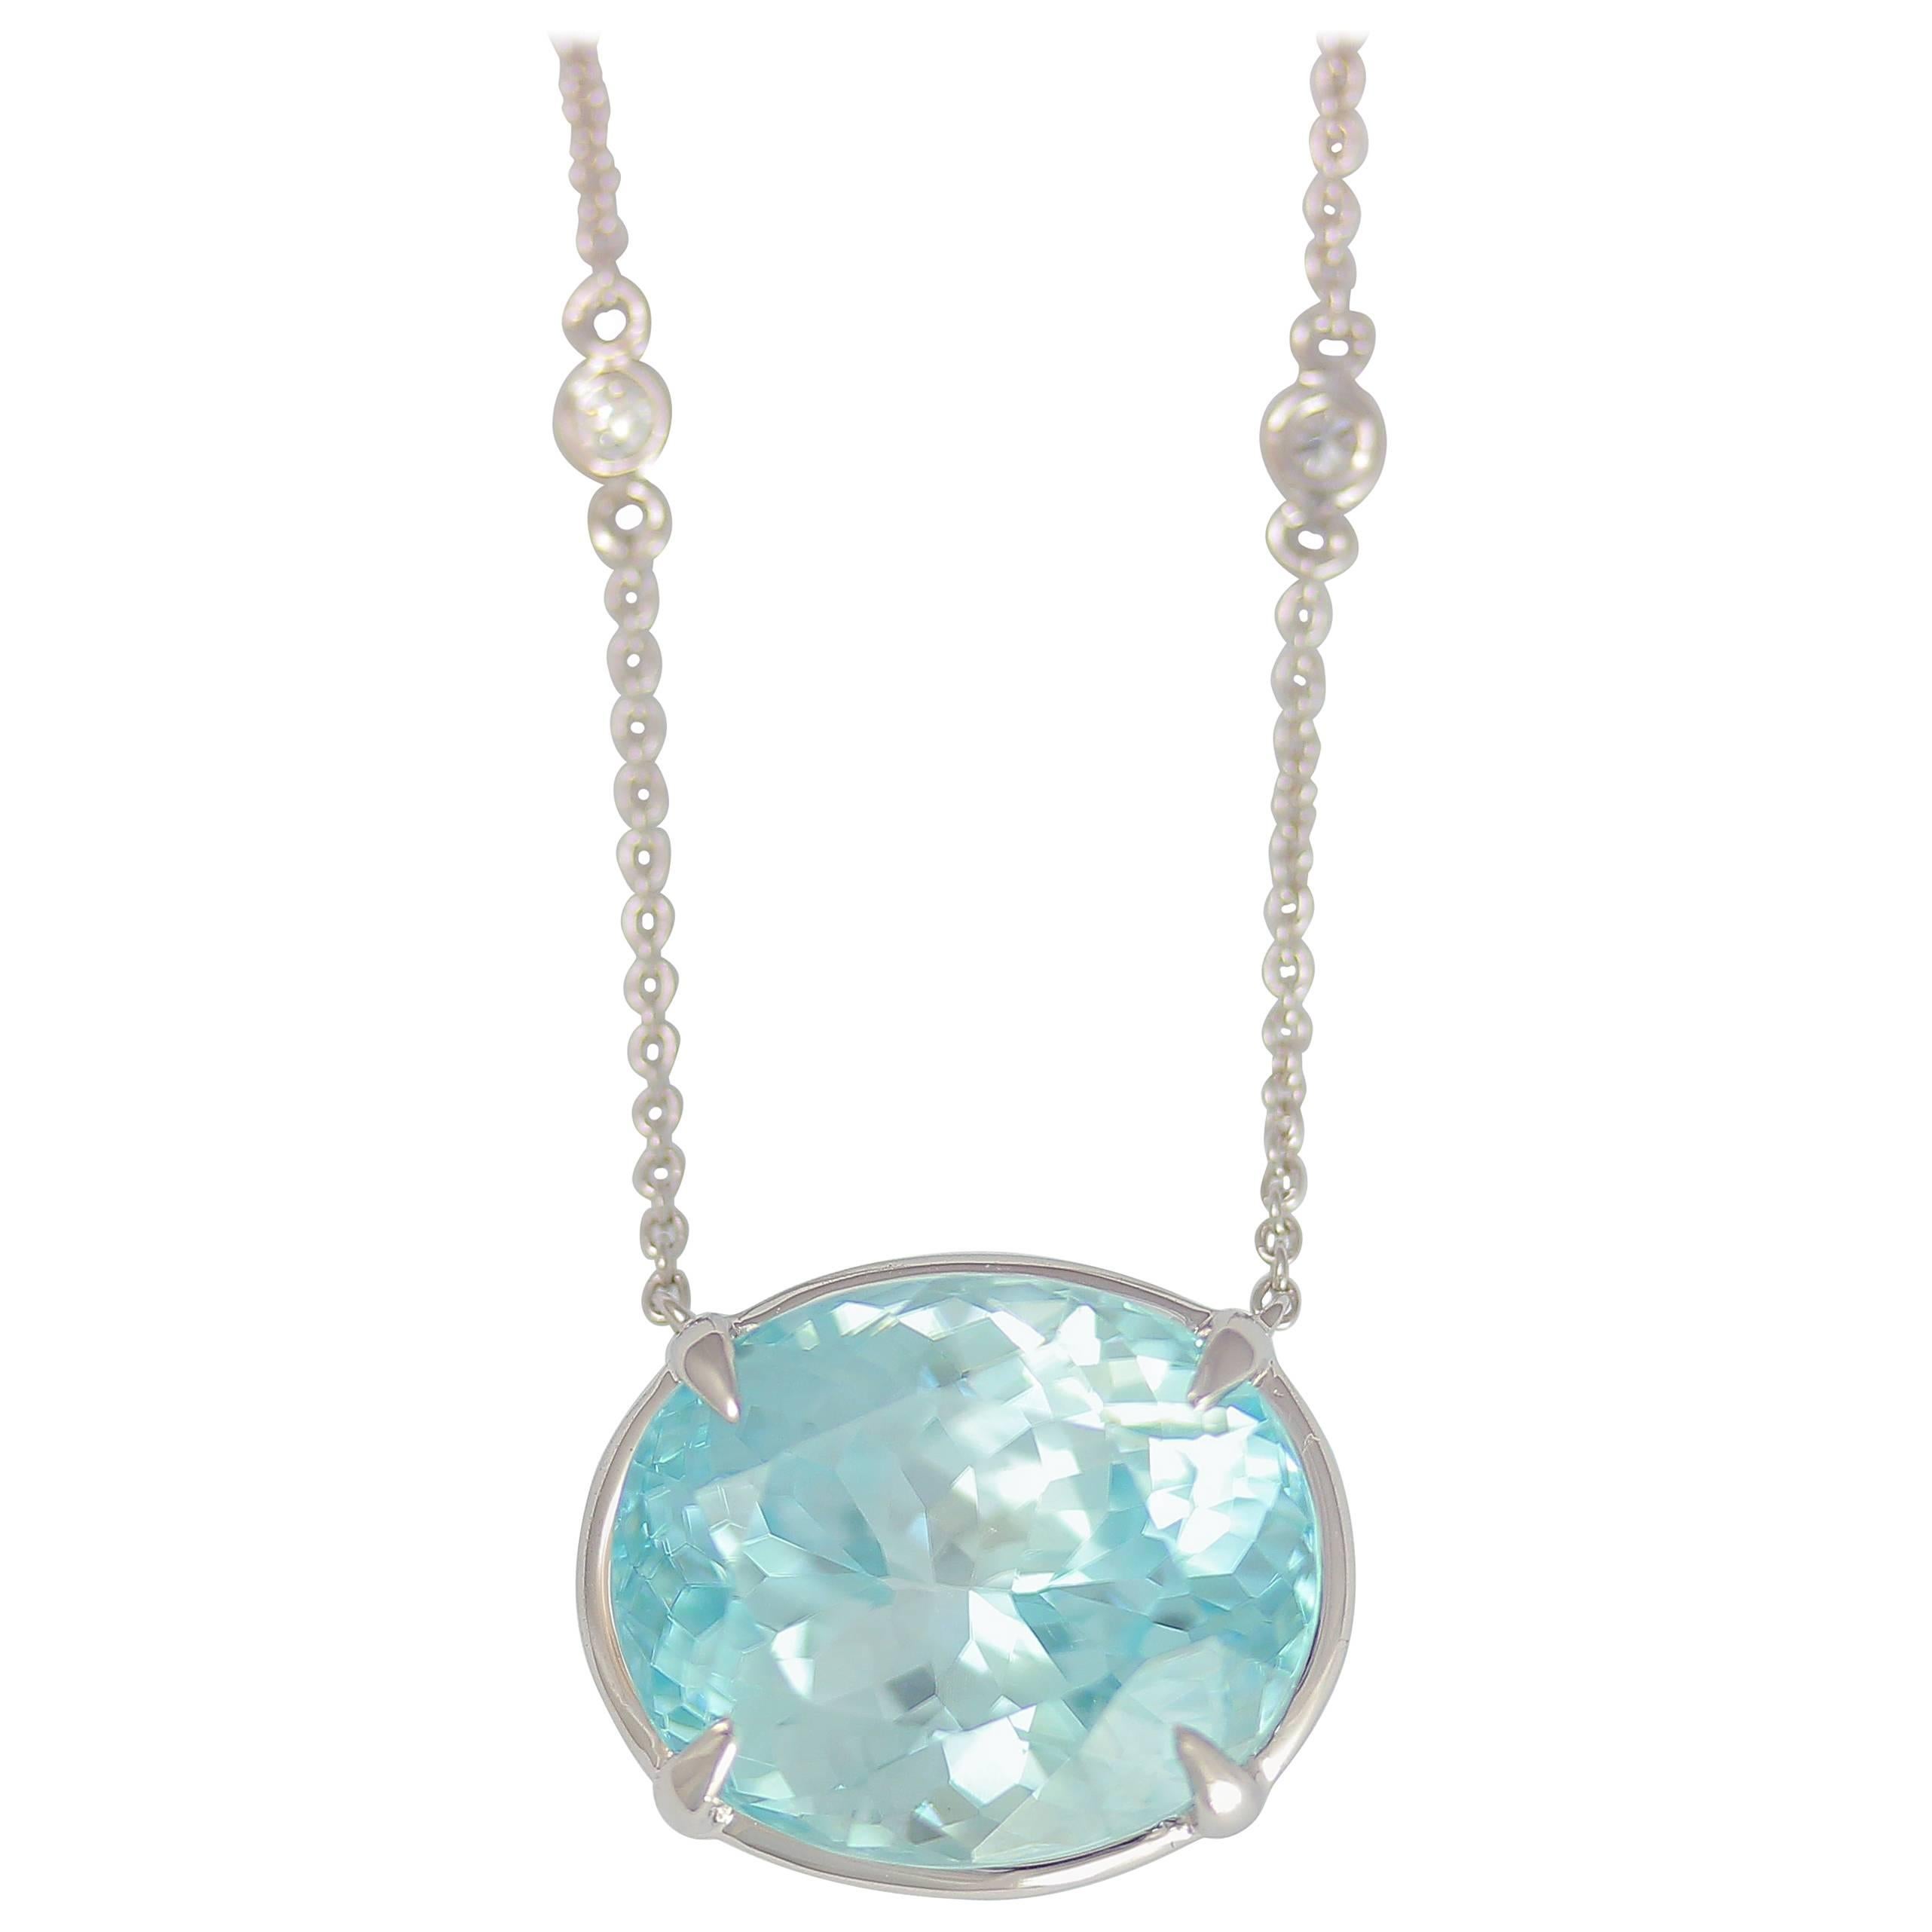 Frederic Sage 25.54 Carat Blue Zircon Diamond and Pendant Necklace